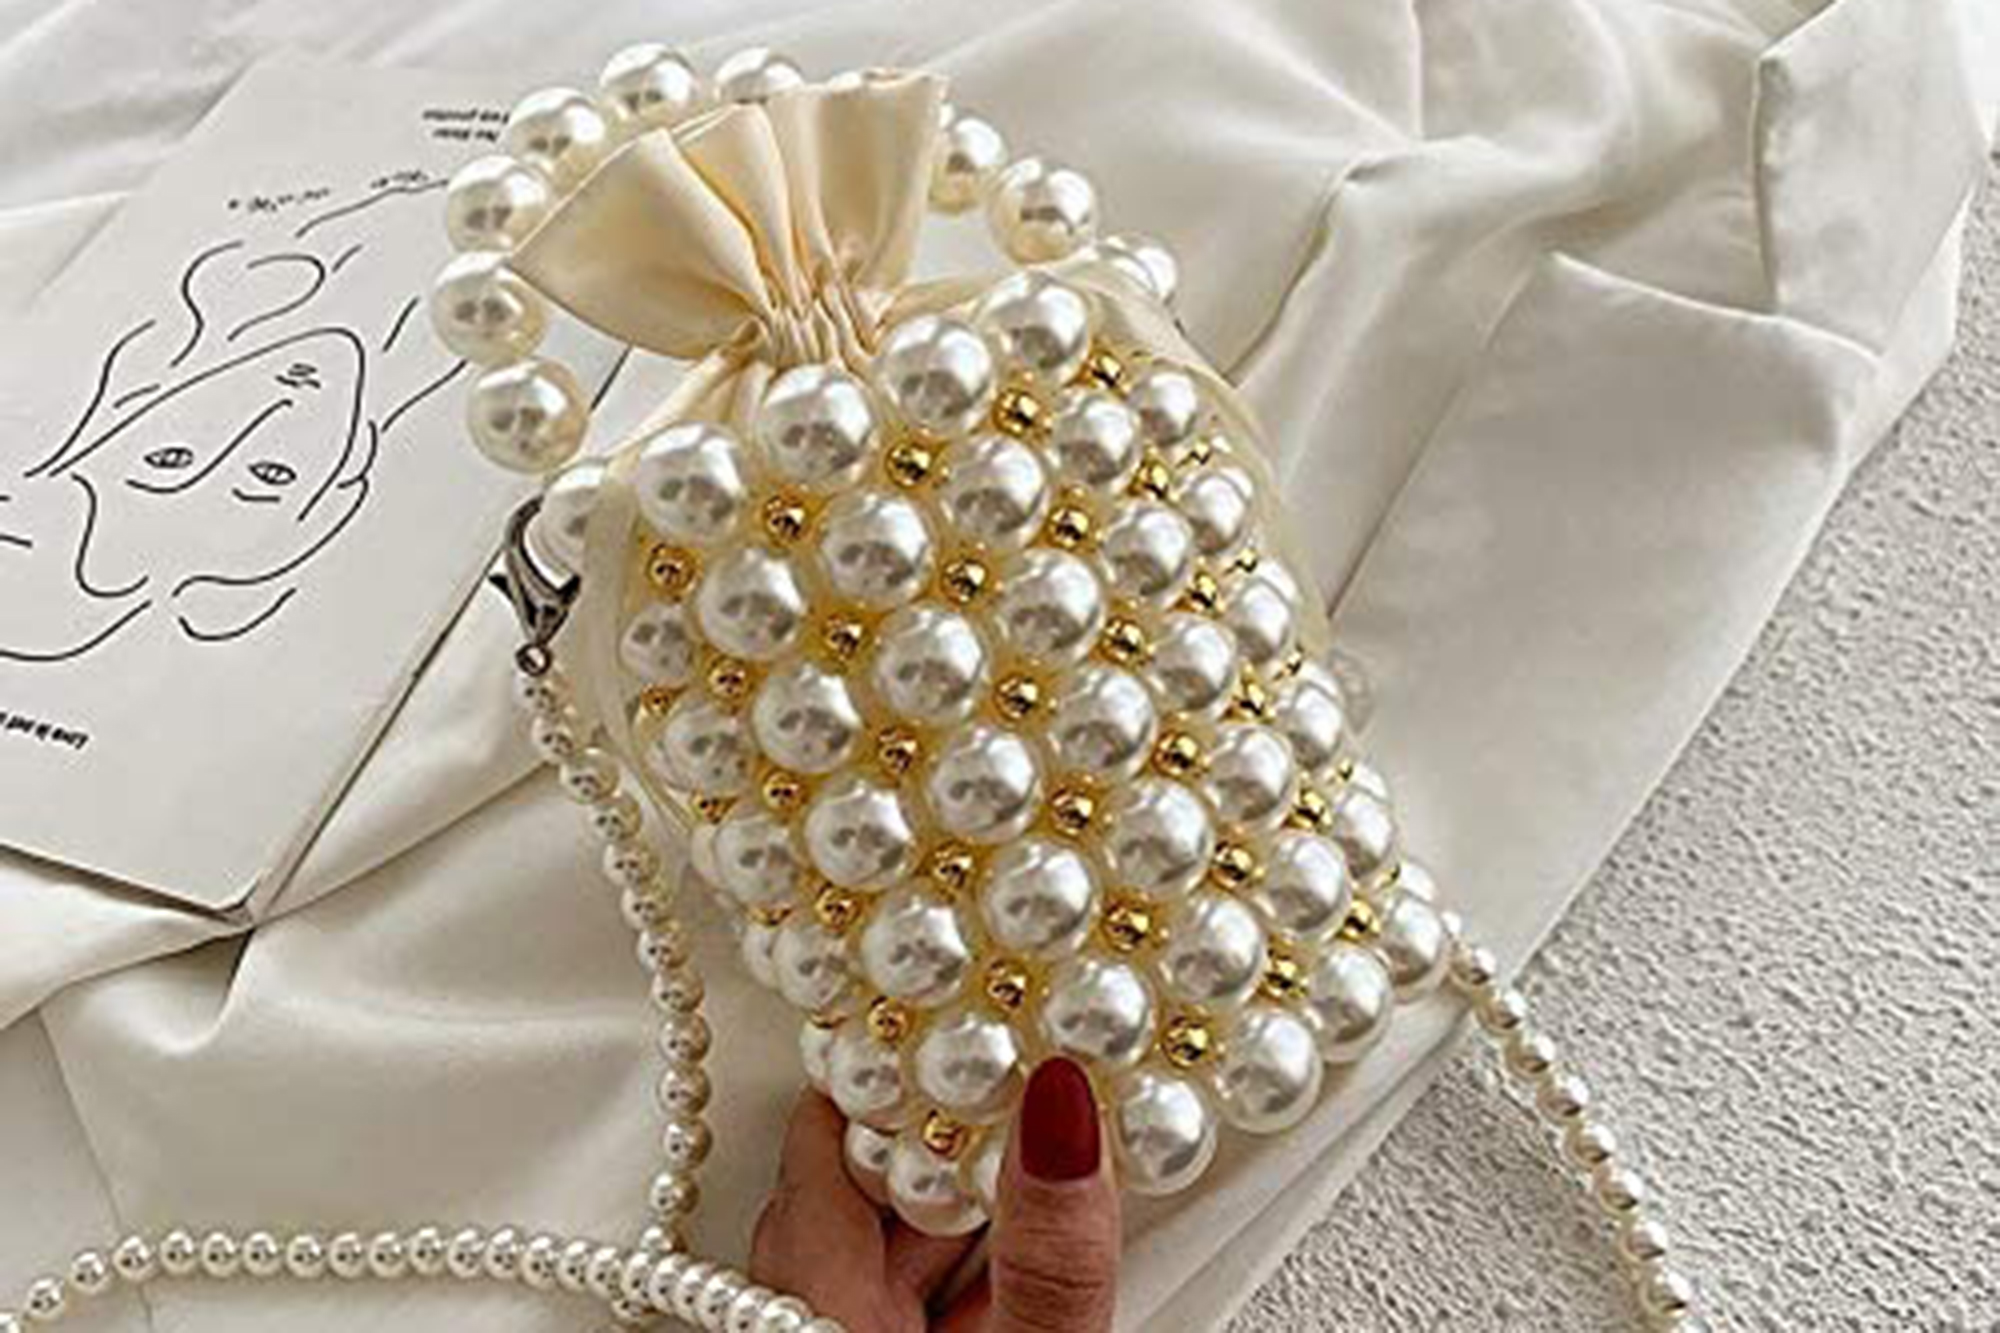 Designer Clutch Bags as Christmas Gift Idea